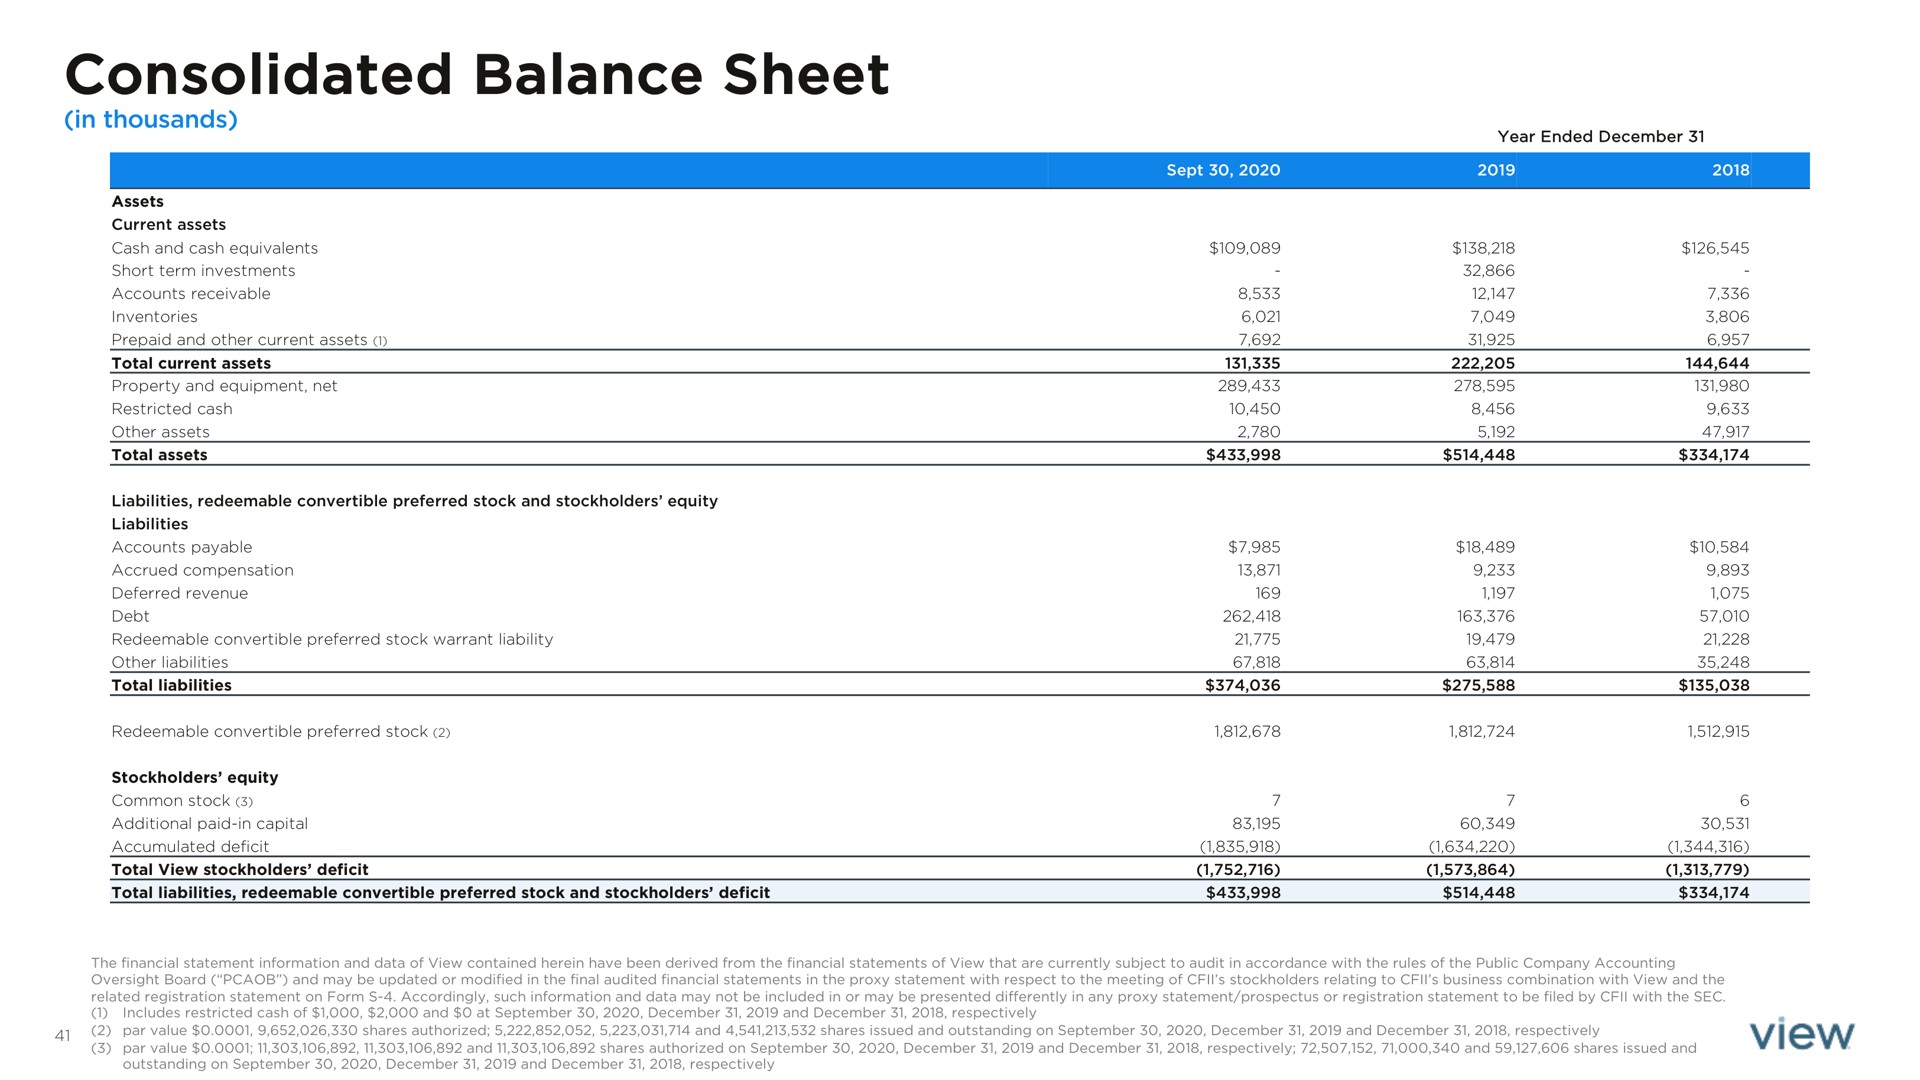 consolidated balance sheet | View